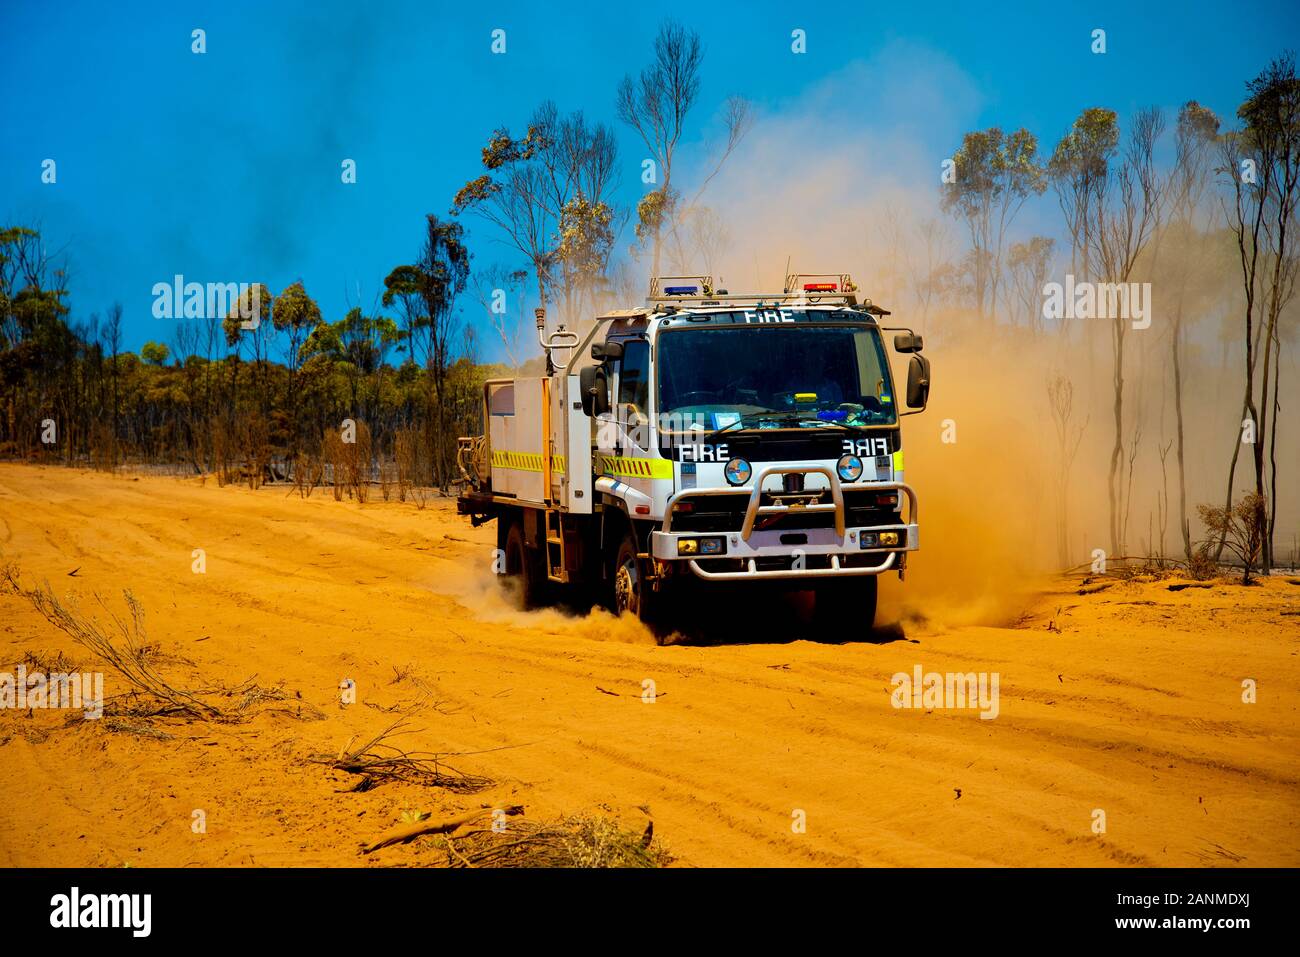 Emergency Response Fire Truck in the Bush - Australia Stock Photo